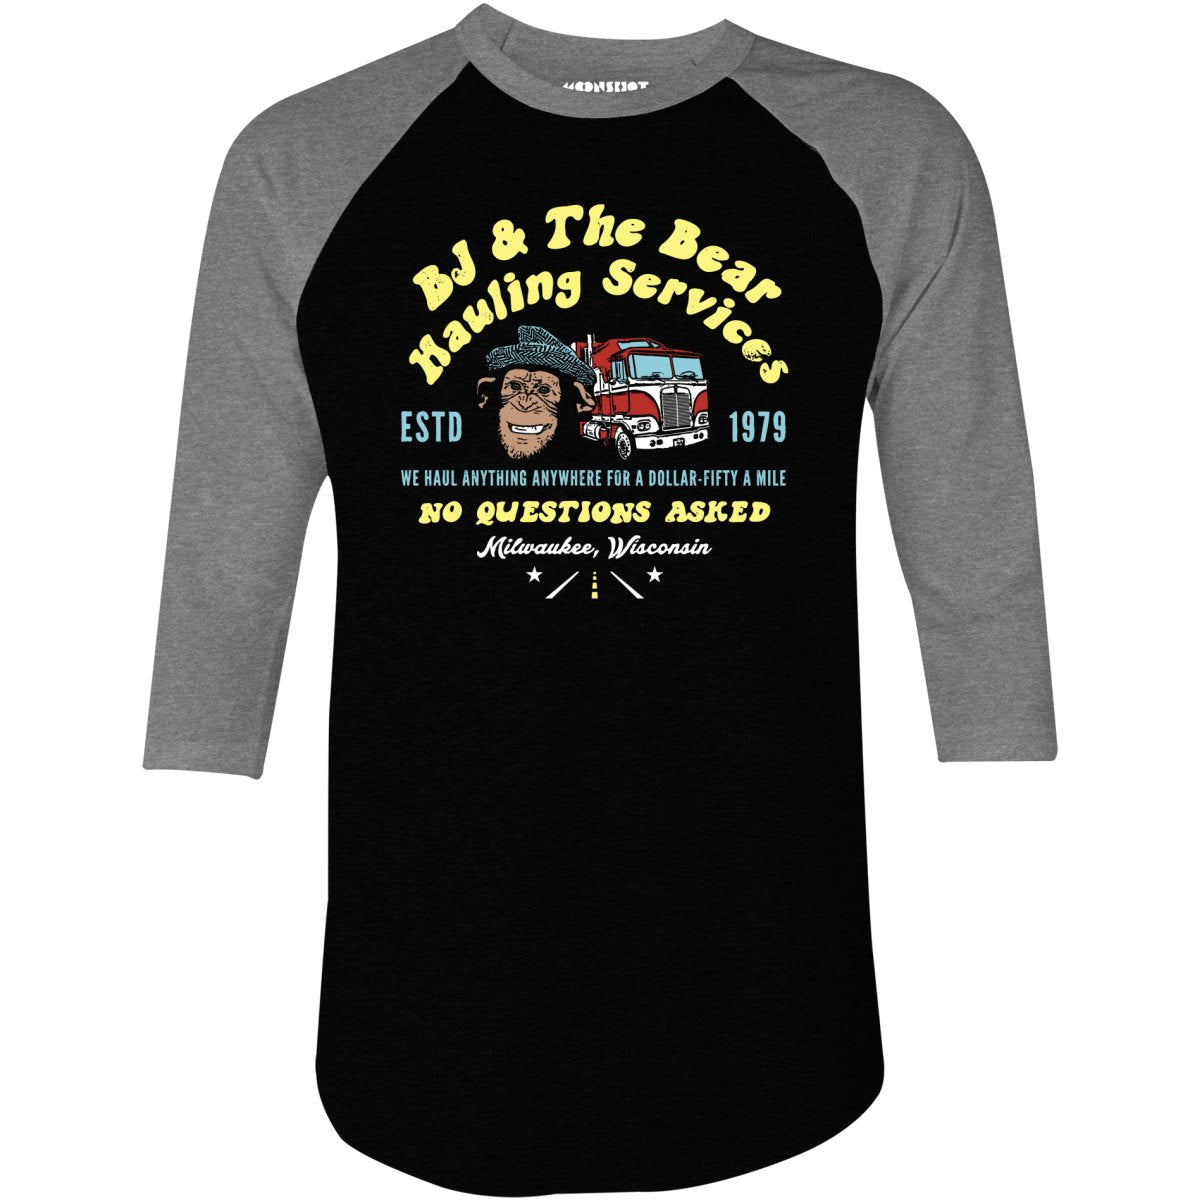 BJ & The Bear Hauling Services - 3/4 Sleeve Raglan T-Shirt